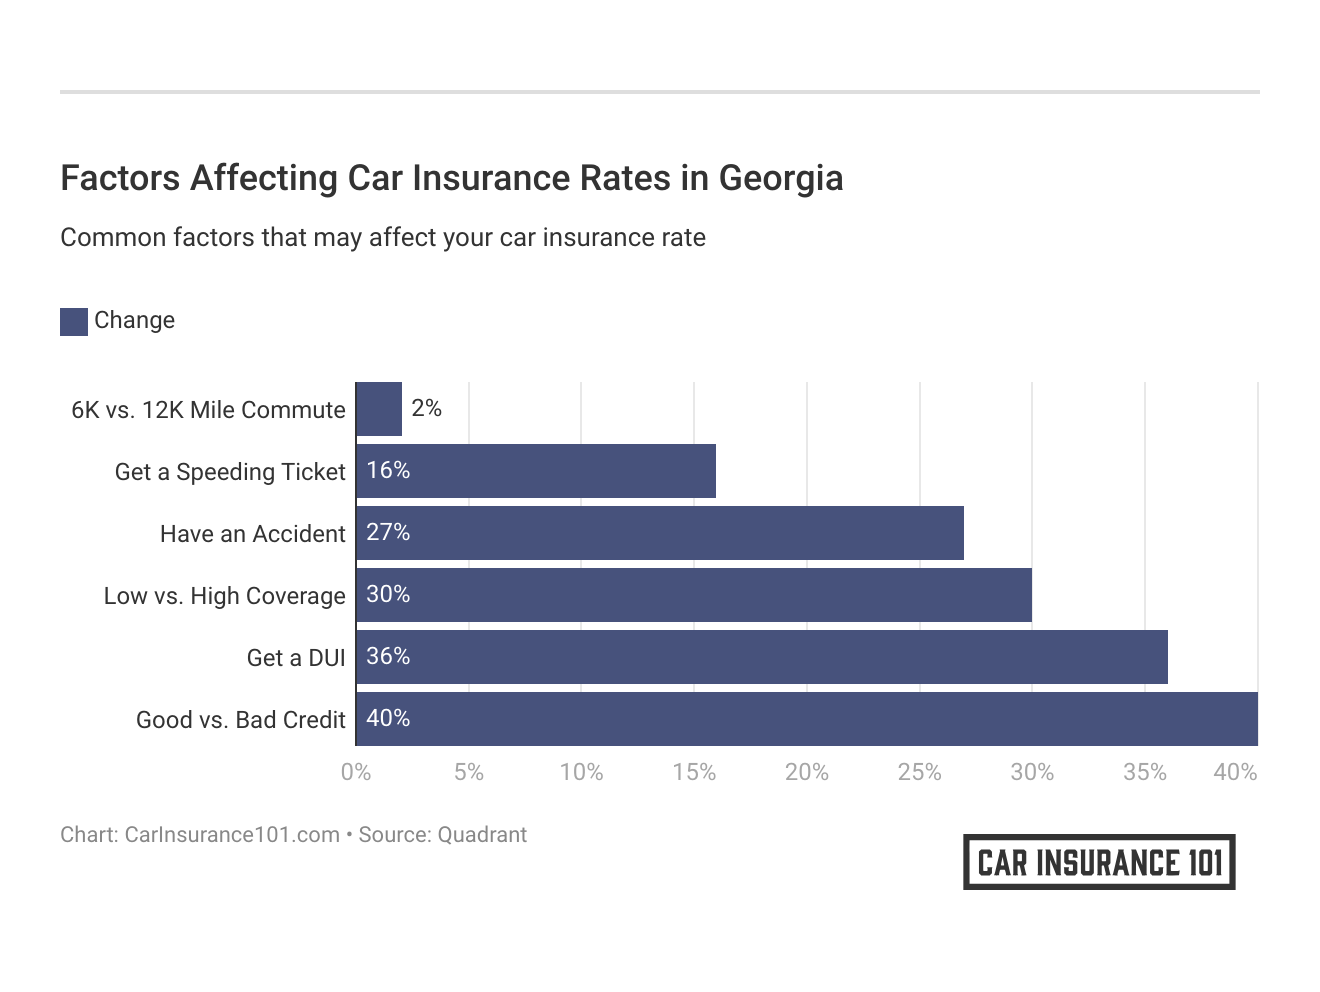 <h3>Factors Affecting Car Insurance Rates in Georgia</h3>